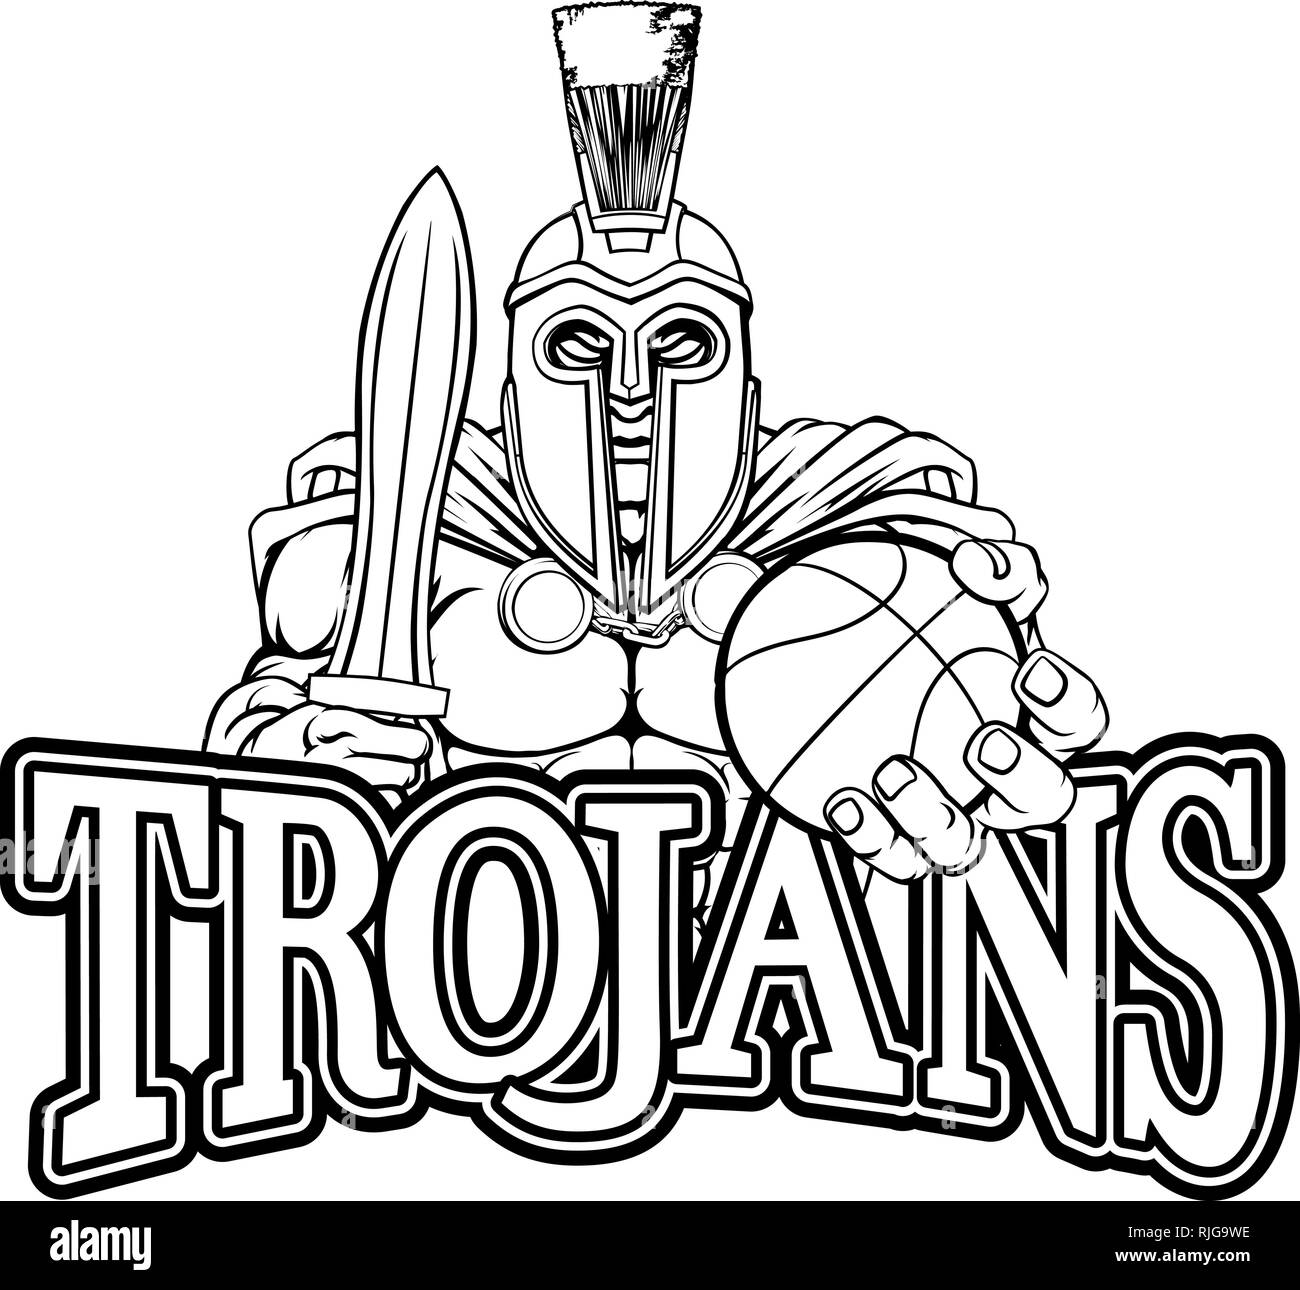 Spartan Trojan Basketball Sports Mascot Stock Vector